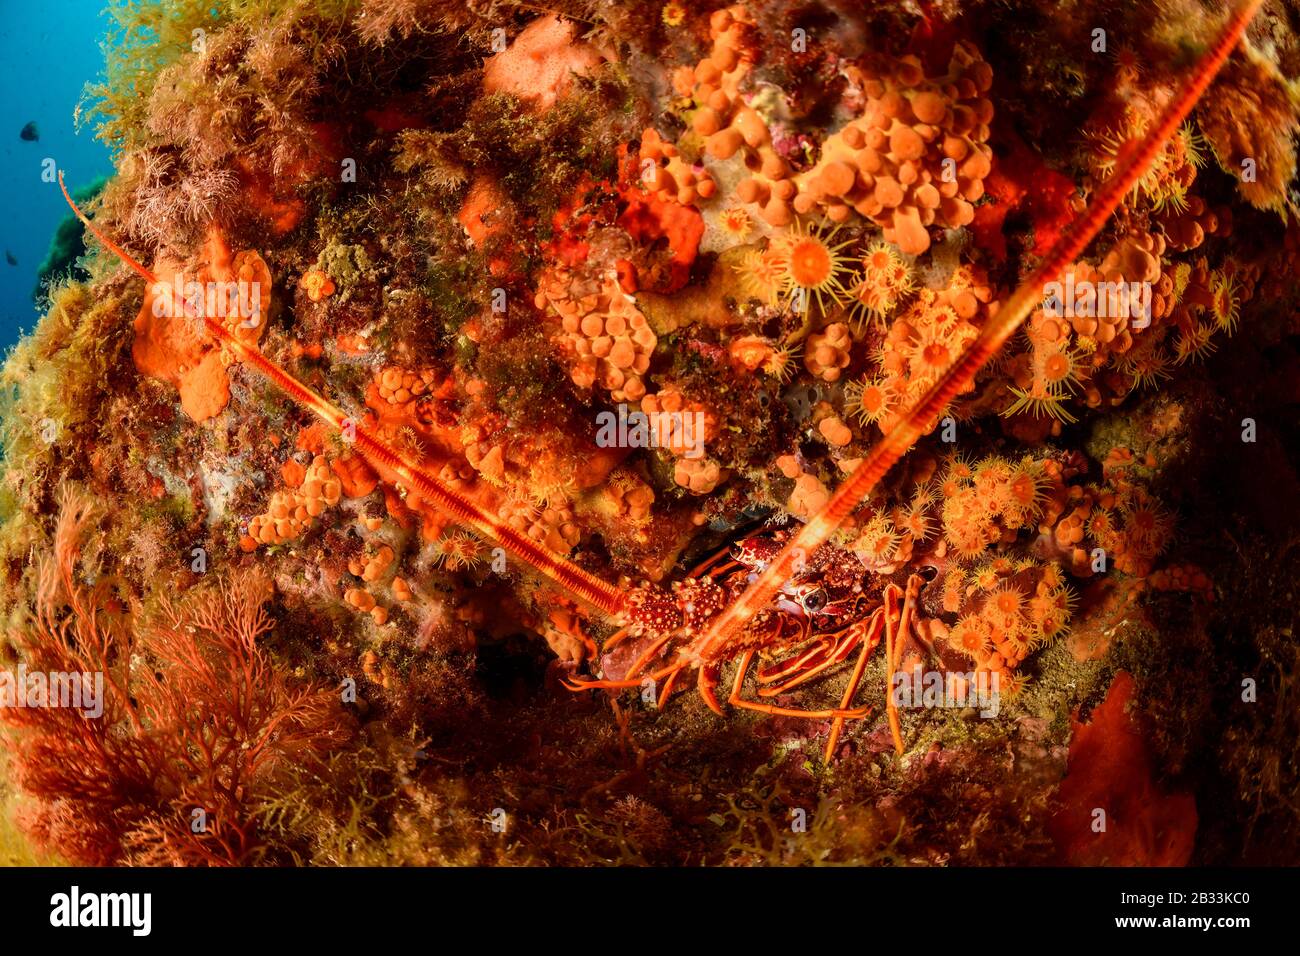 European spiny lobster, Palinurus elephas, in colourful mediterranean coral reef, Tamariu, Costa Brava, Spain, Mediterranean Sea Stock Photo